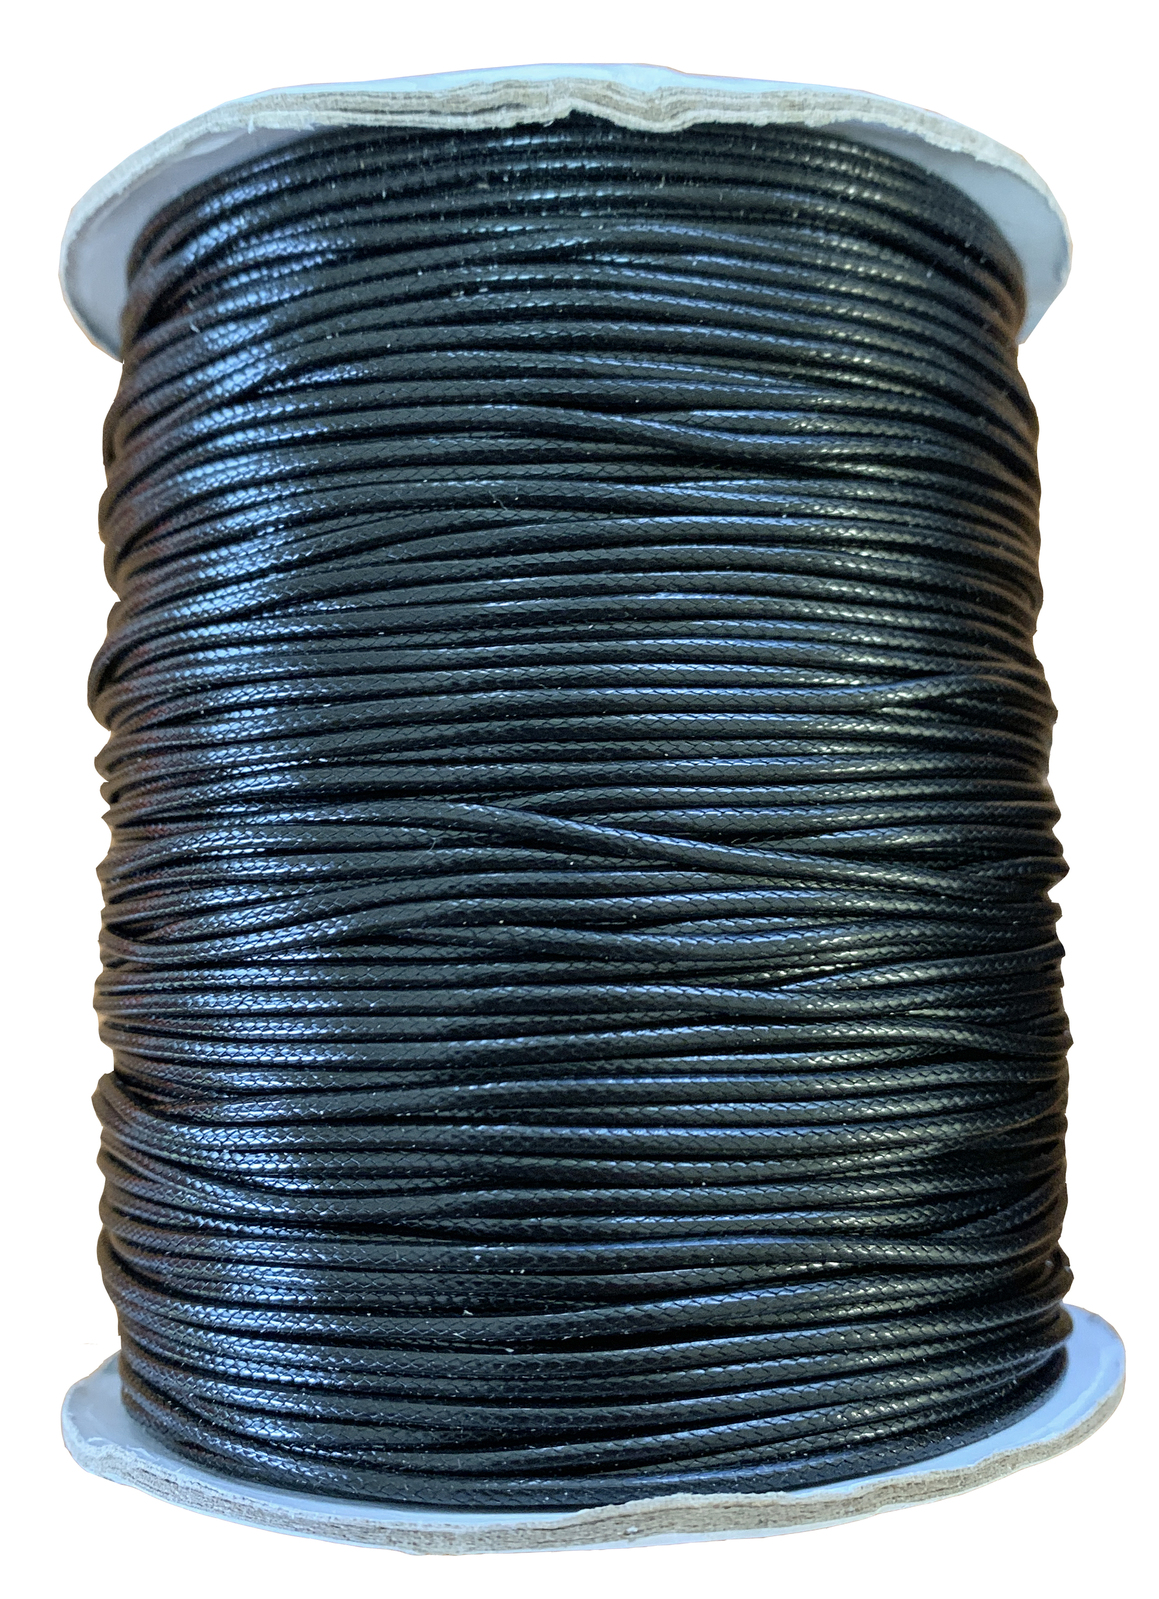 Korean Waxed Cotton Cord - Round - Black - 2mm (Per Metre)